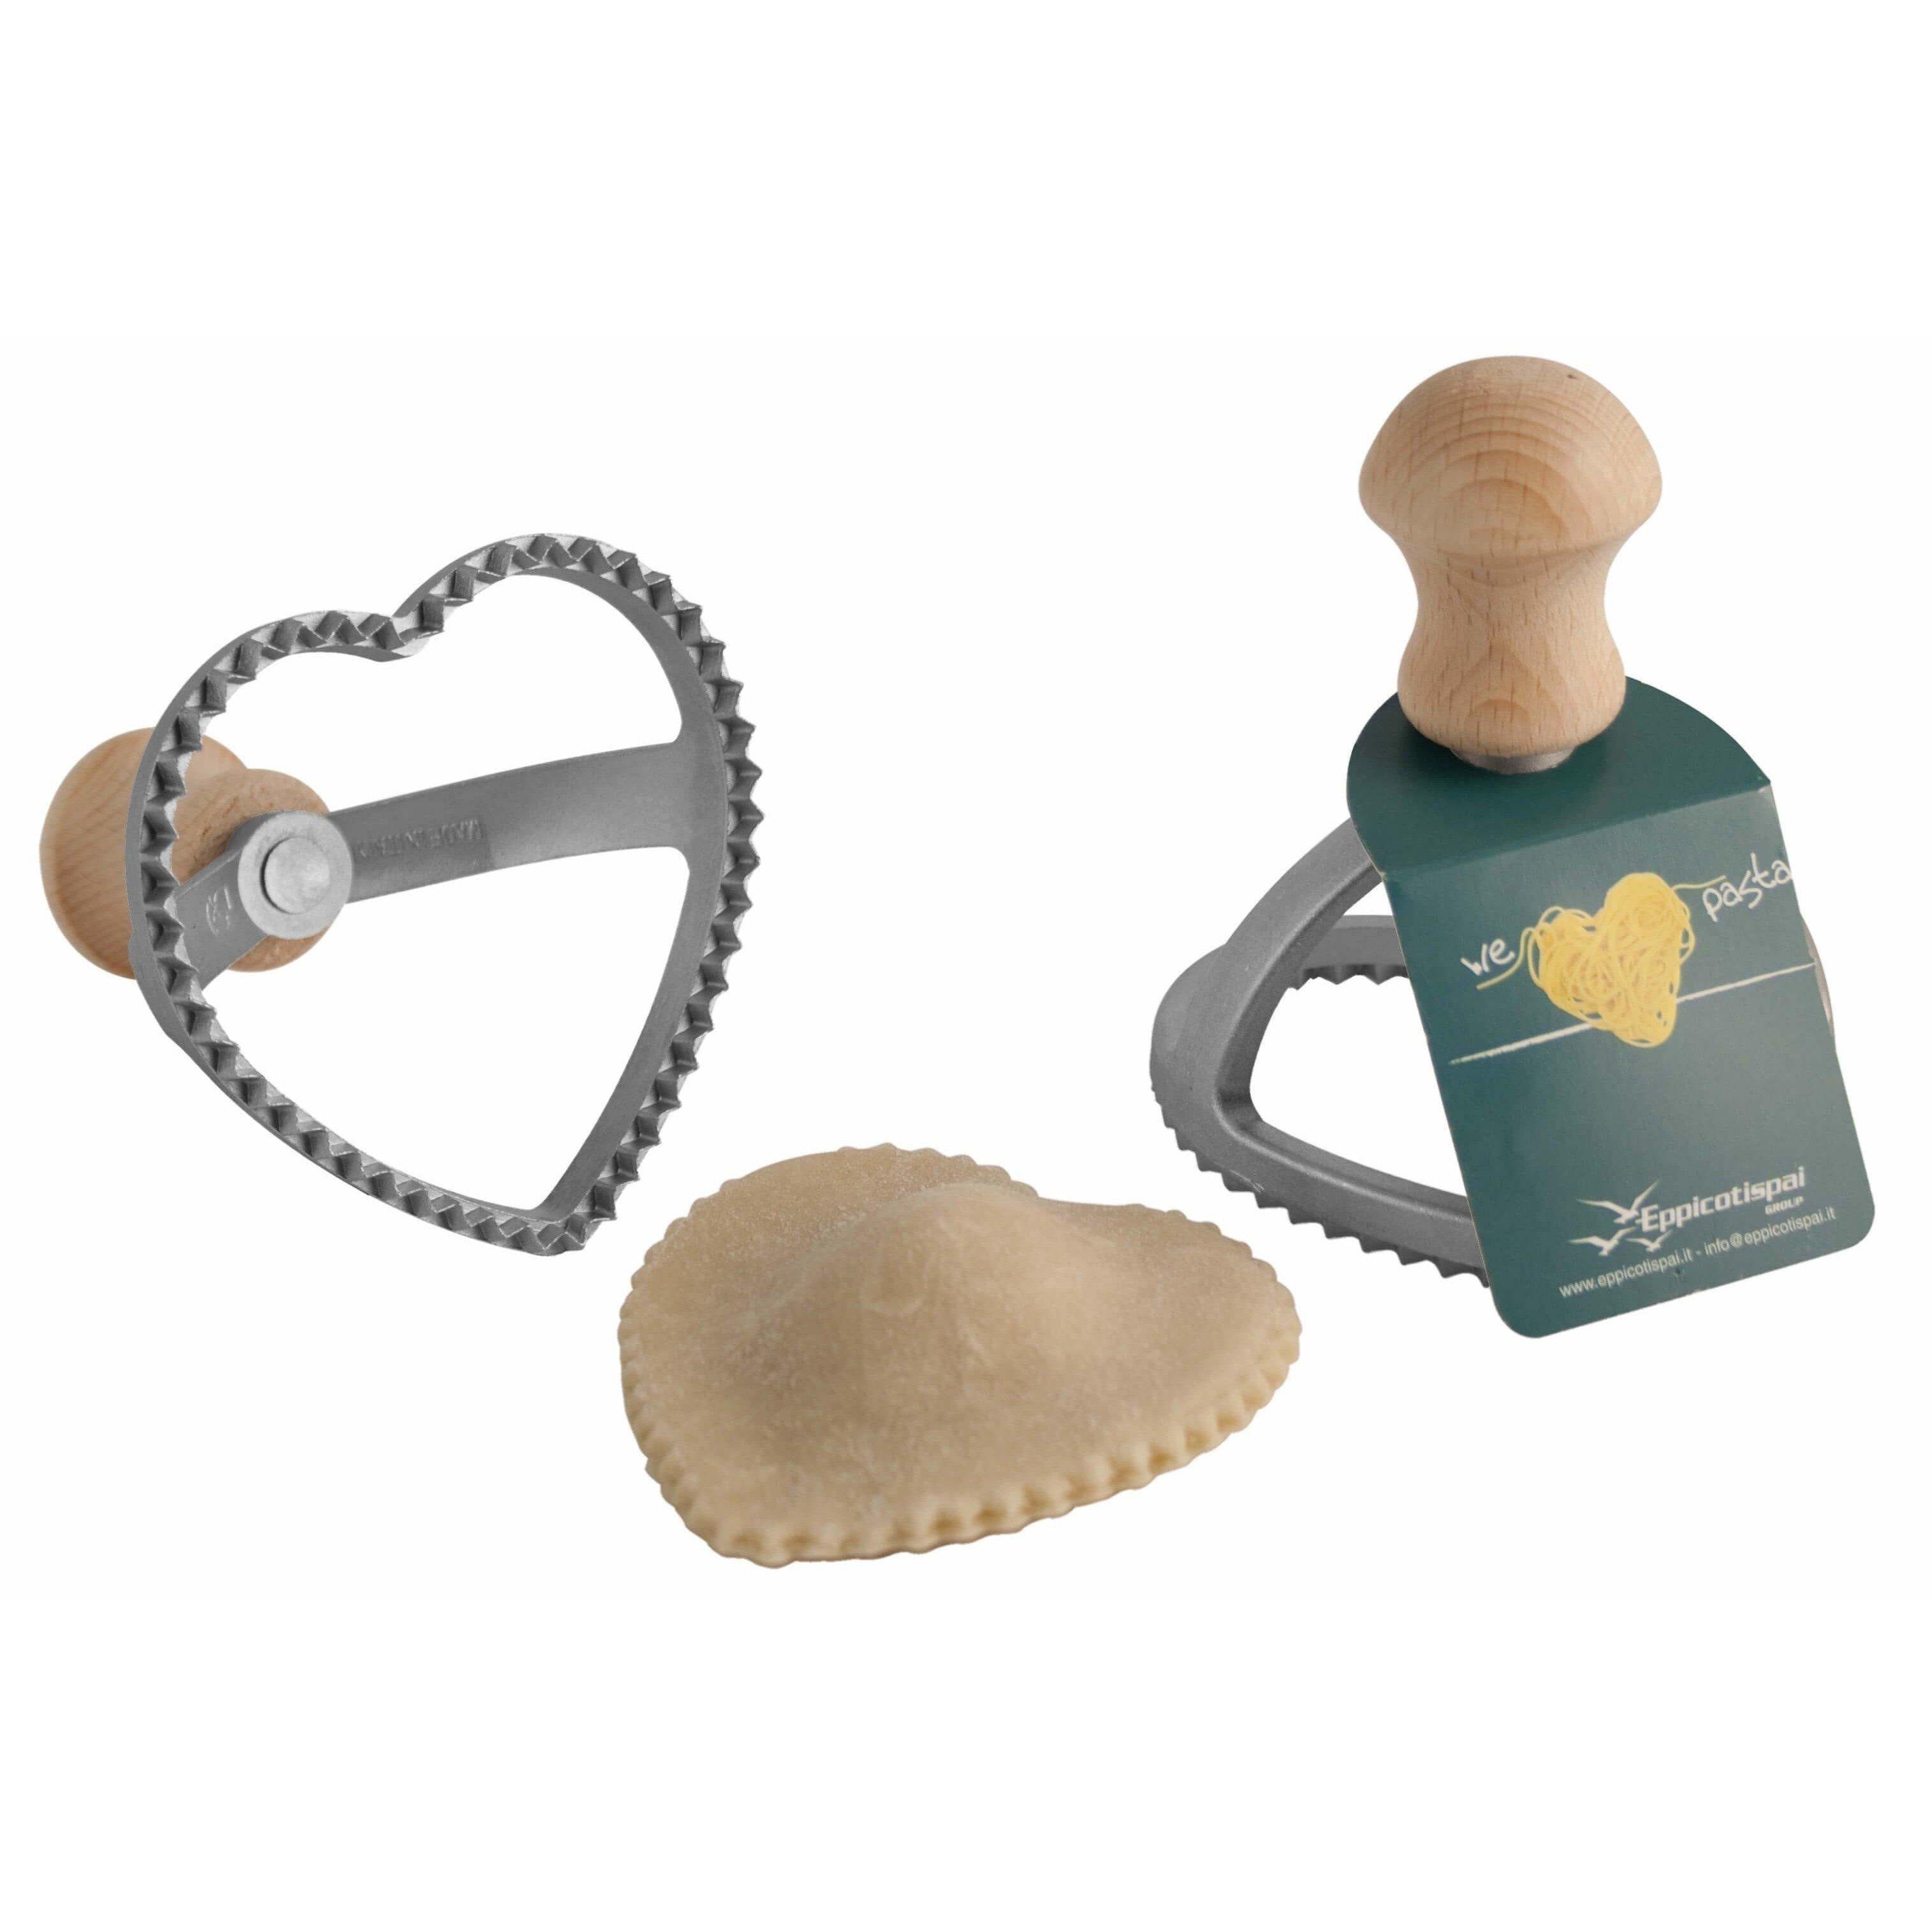 Ravioli Stamp (Heart) - Pasta Kitchen (tutto pasta)